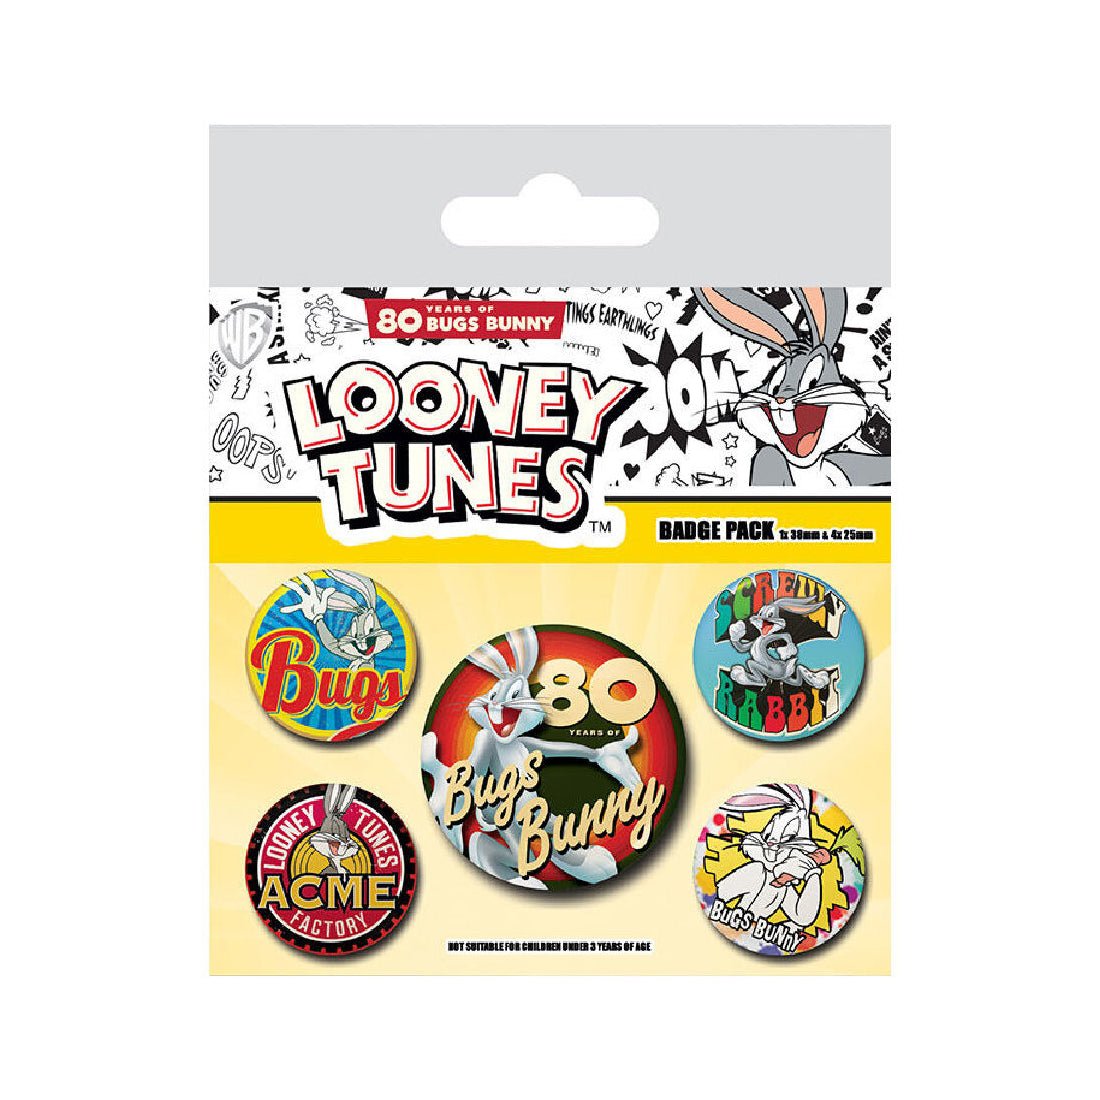 Looney Tunes - Bugs Bunny 80th Anniversary Badge Pack - أكسسوار - Store 974 | ستور ٩٧٤